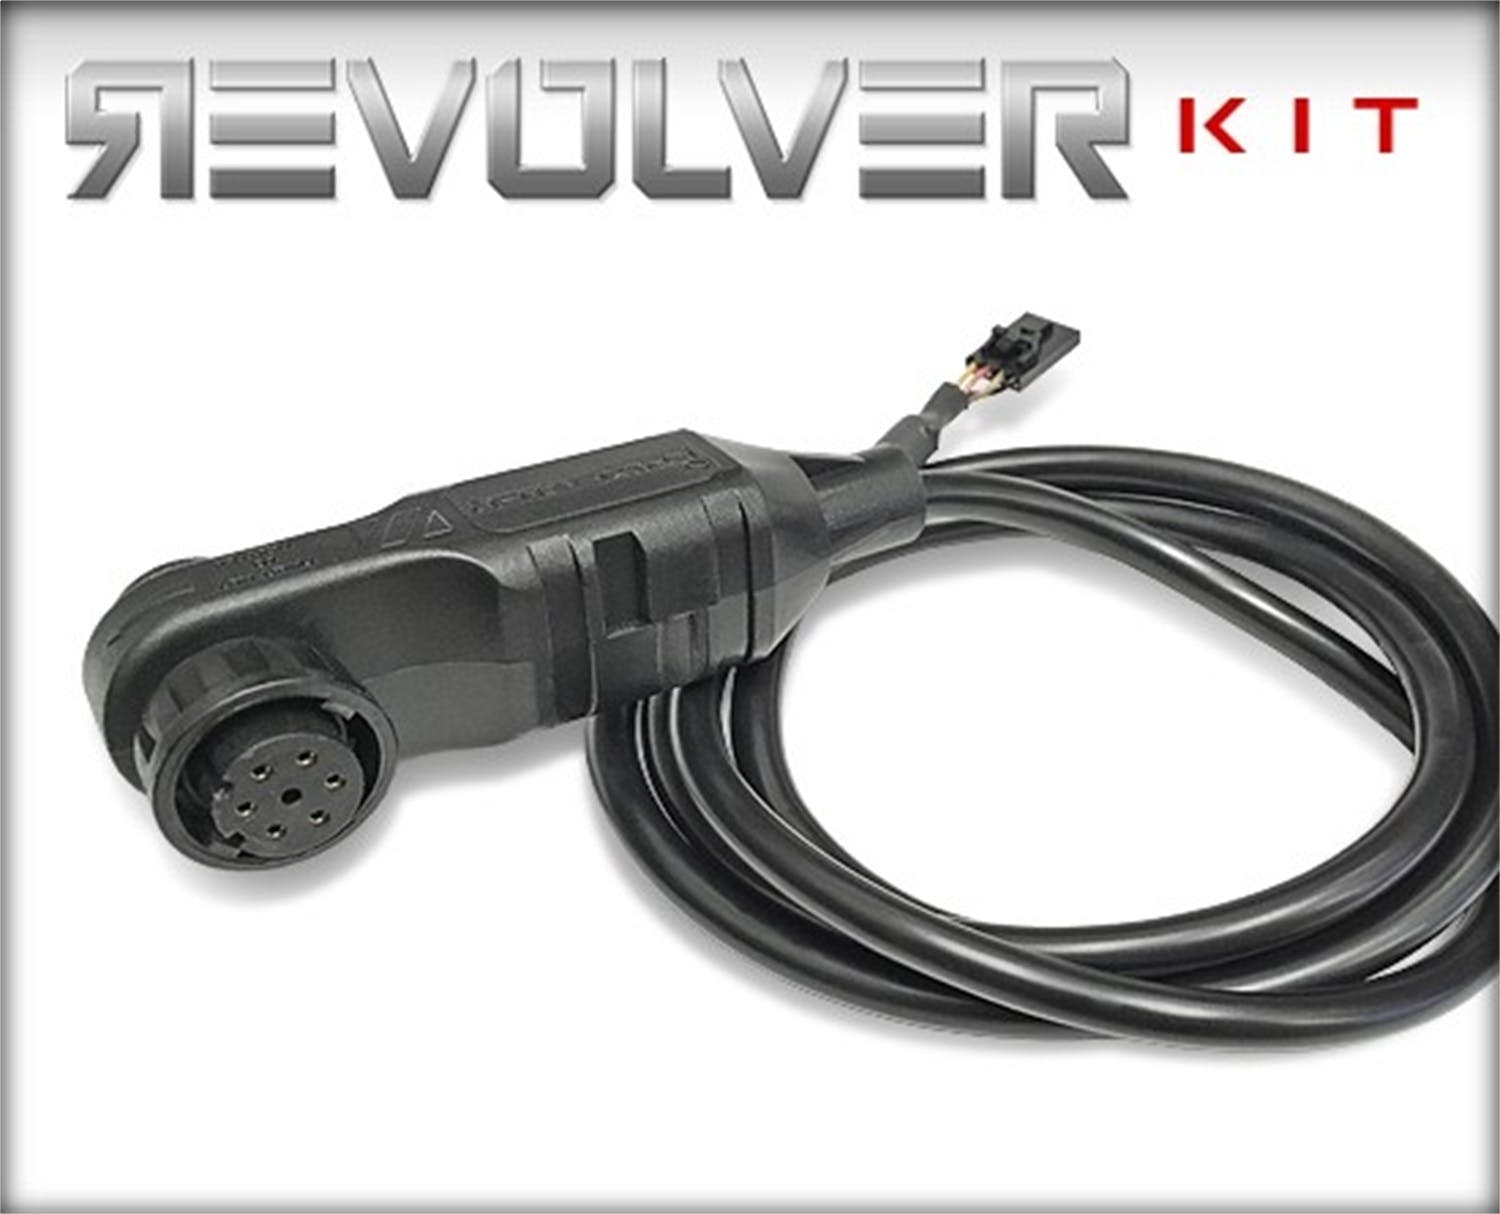 Edge Products 14110-3 Revolver Performance Kit